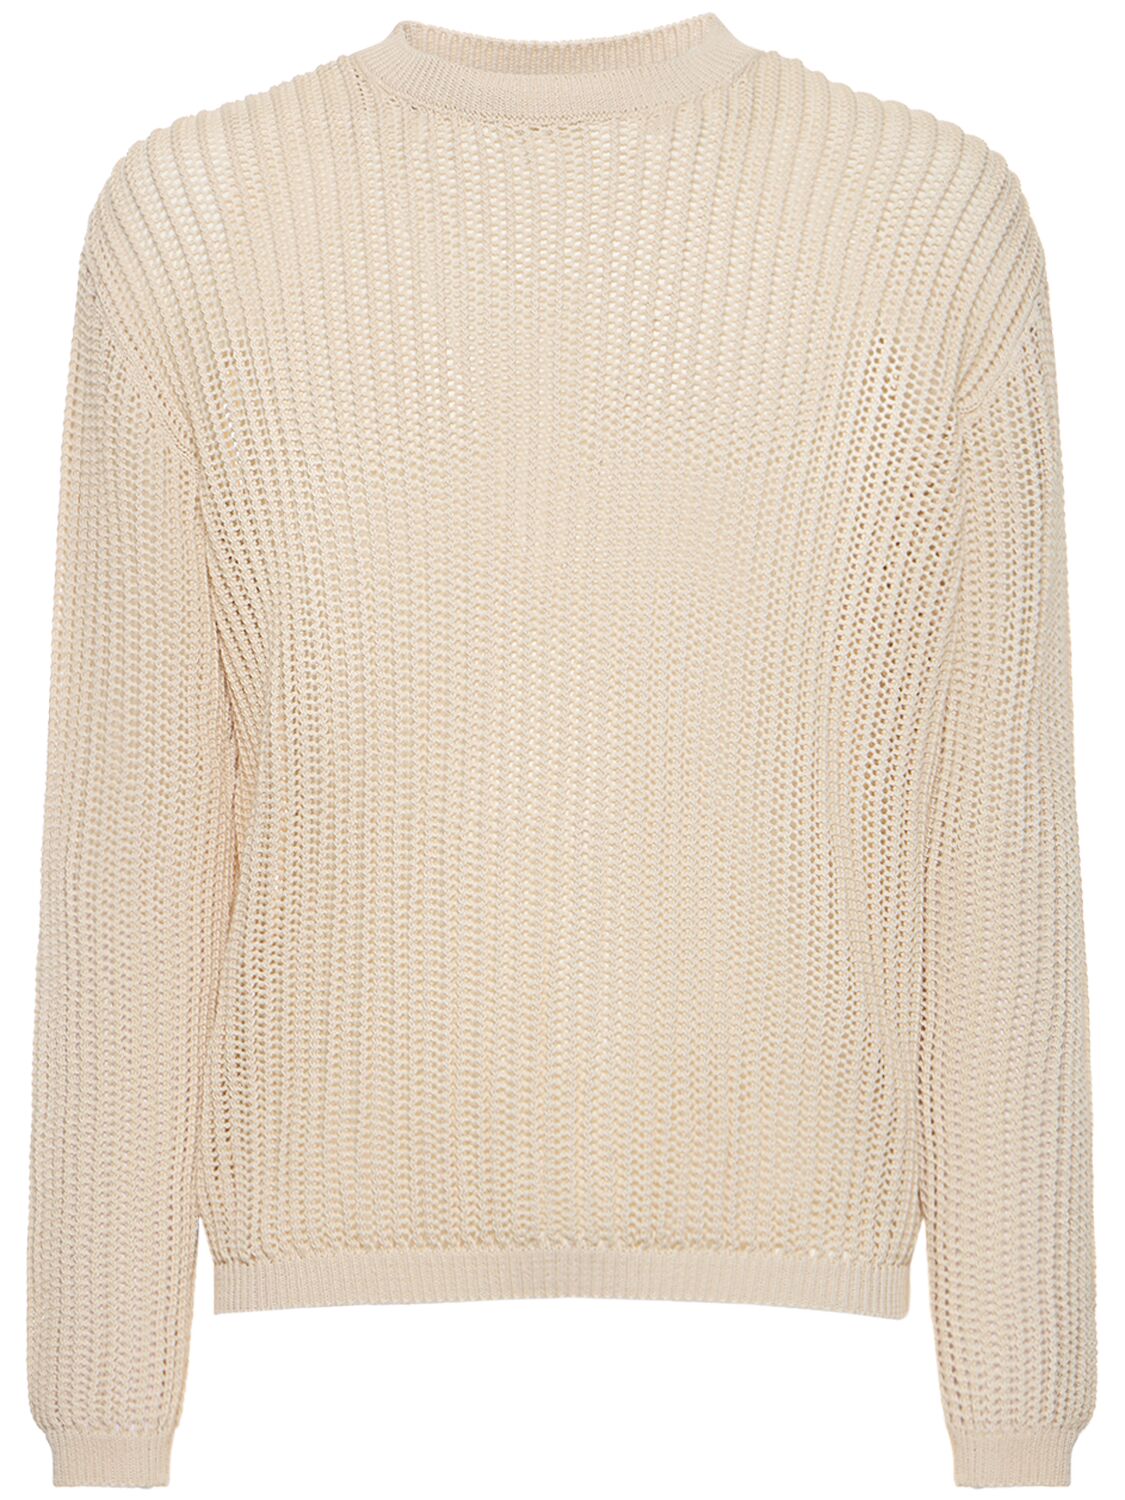 Cotton Rib Knit Crewneck Sweater